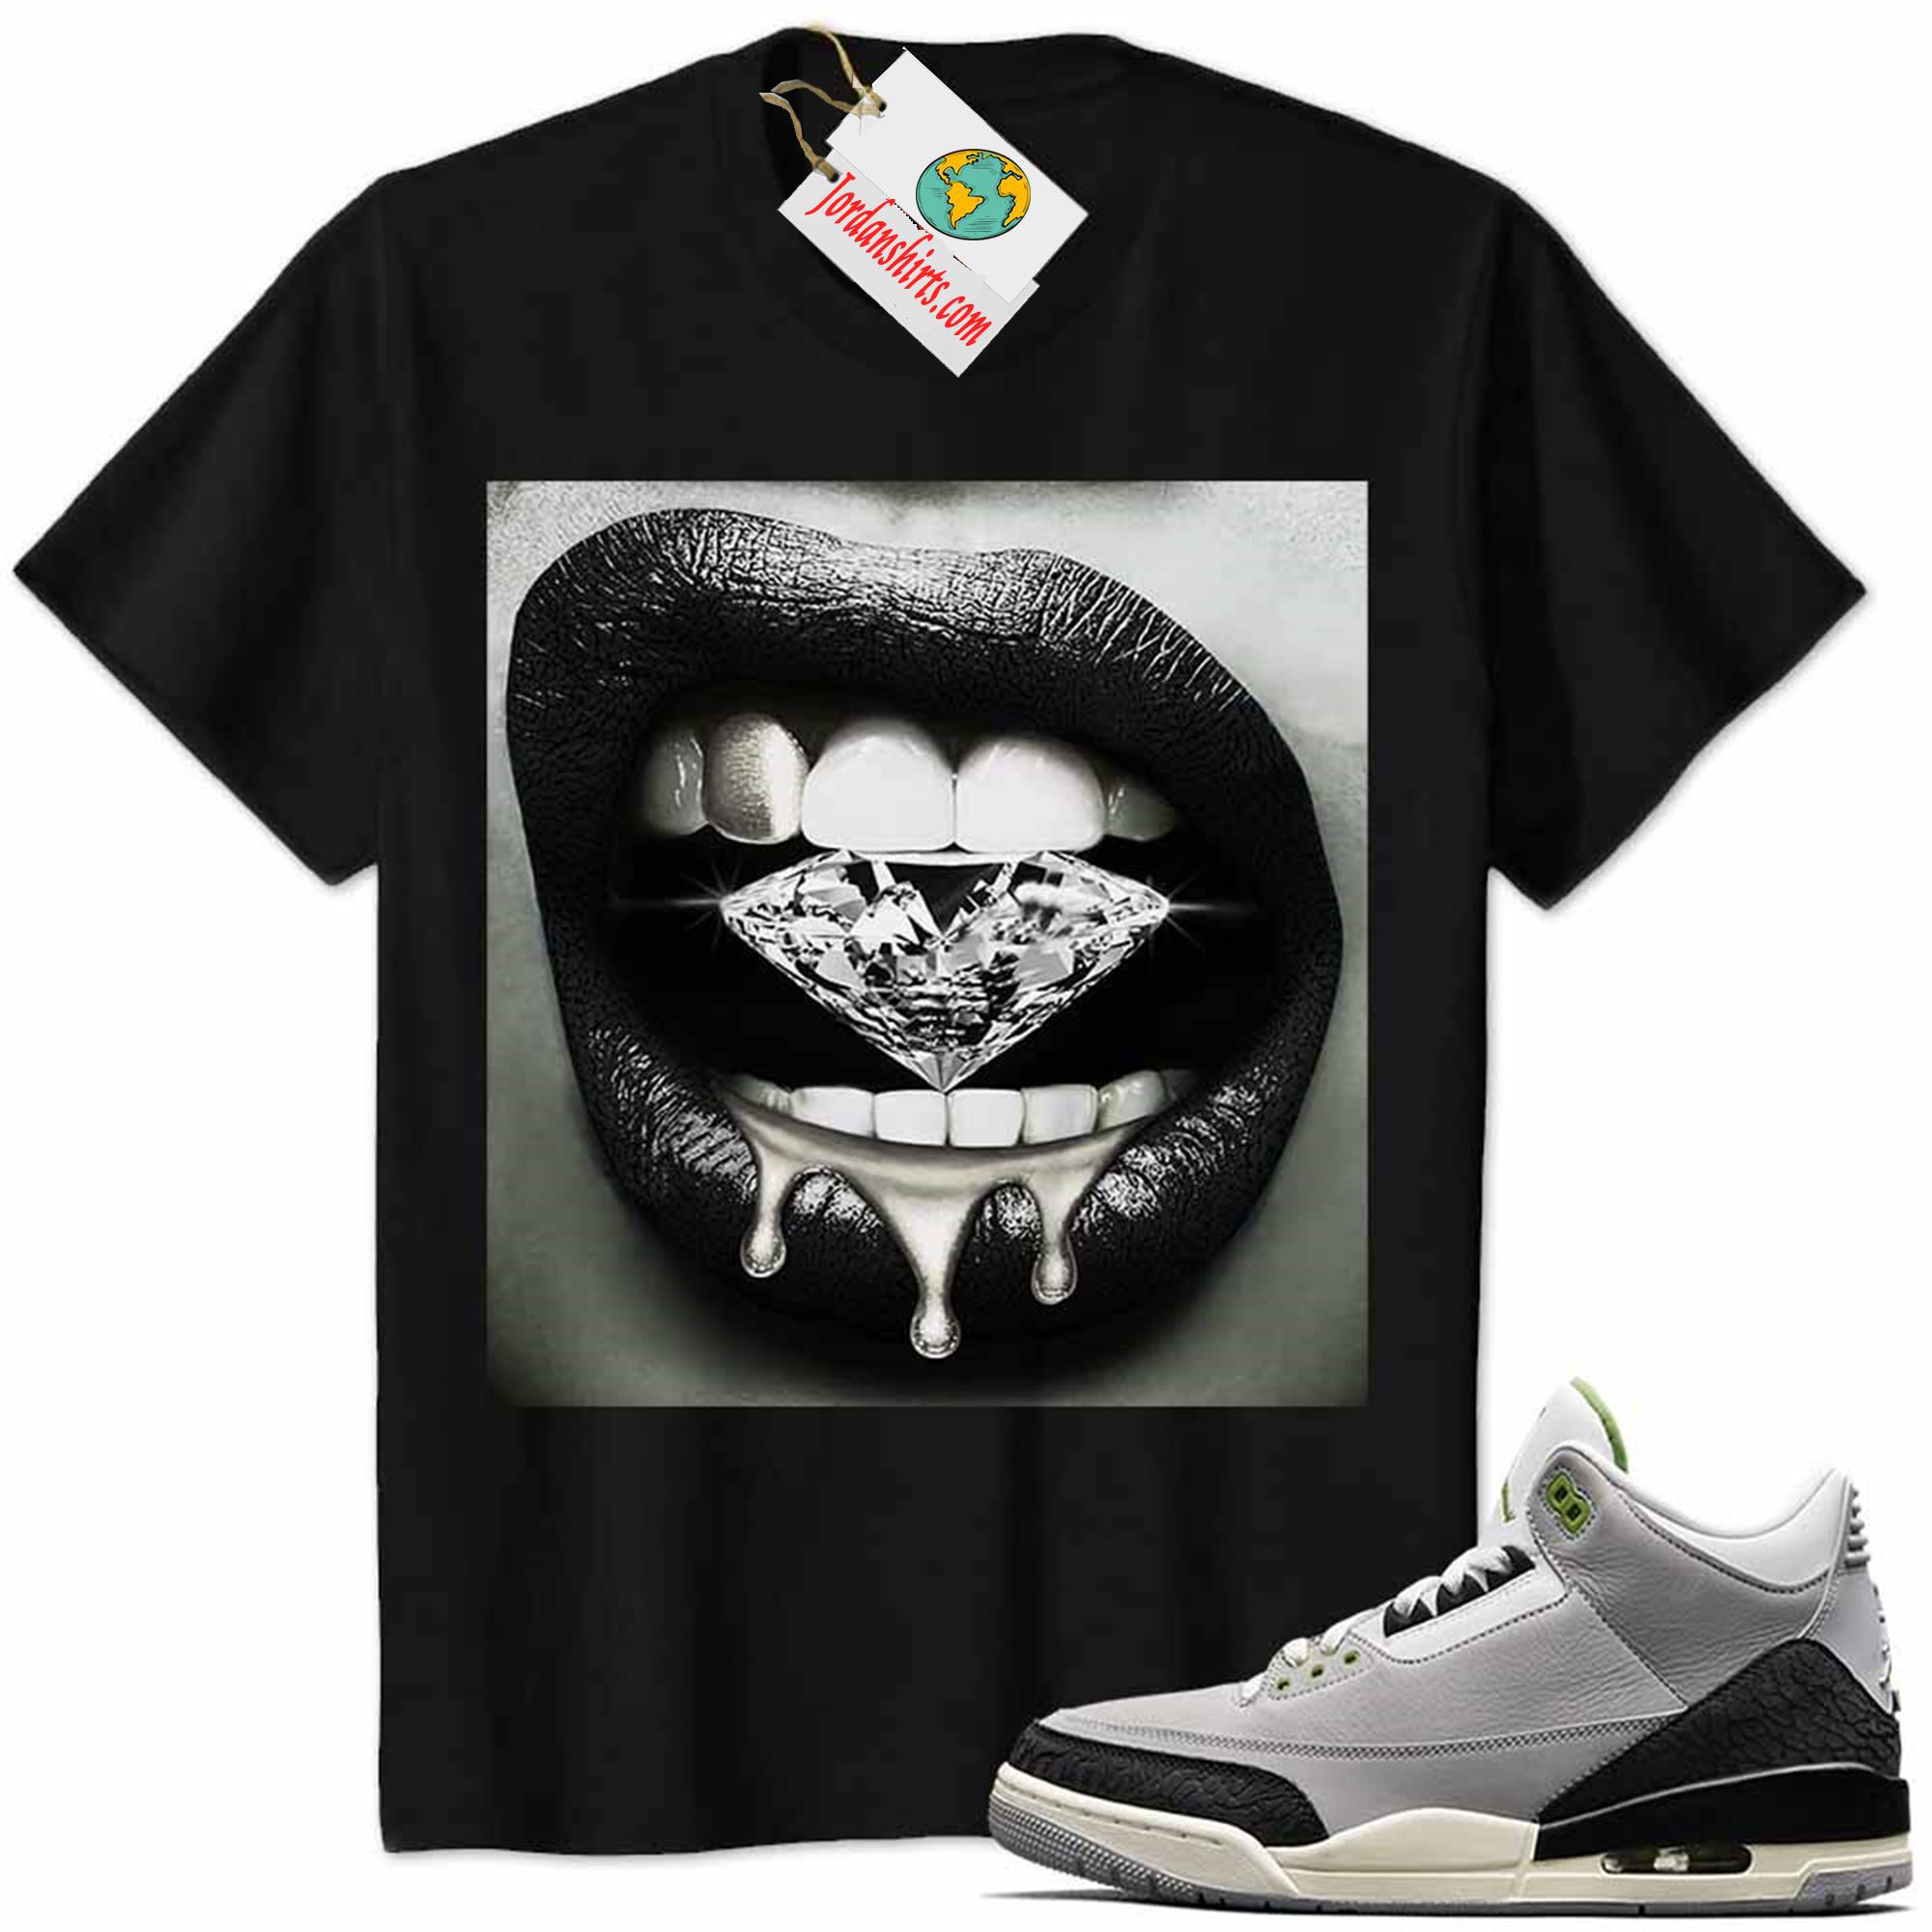 Jordan 3 Shirt, Jordan 3 Chlorophyll Shirt Sexy Lip Bite Diamond Dripping Black Full Size Up To 5xl